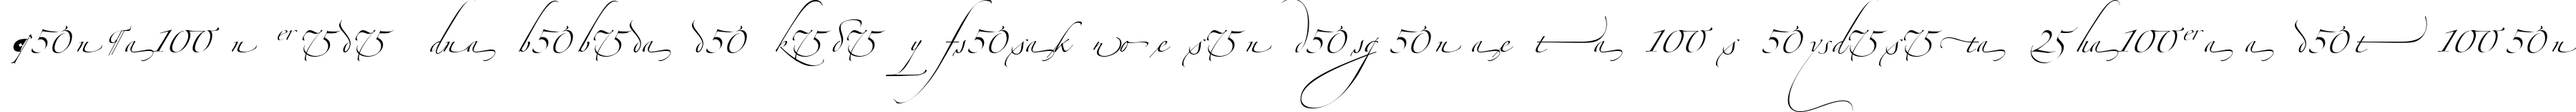 Пример написания шрифтом Alexandra Zeferino Ornamental текста на испанском